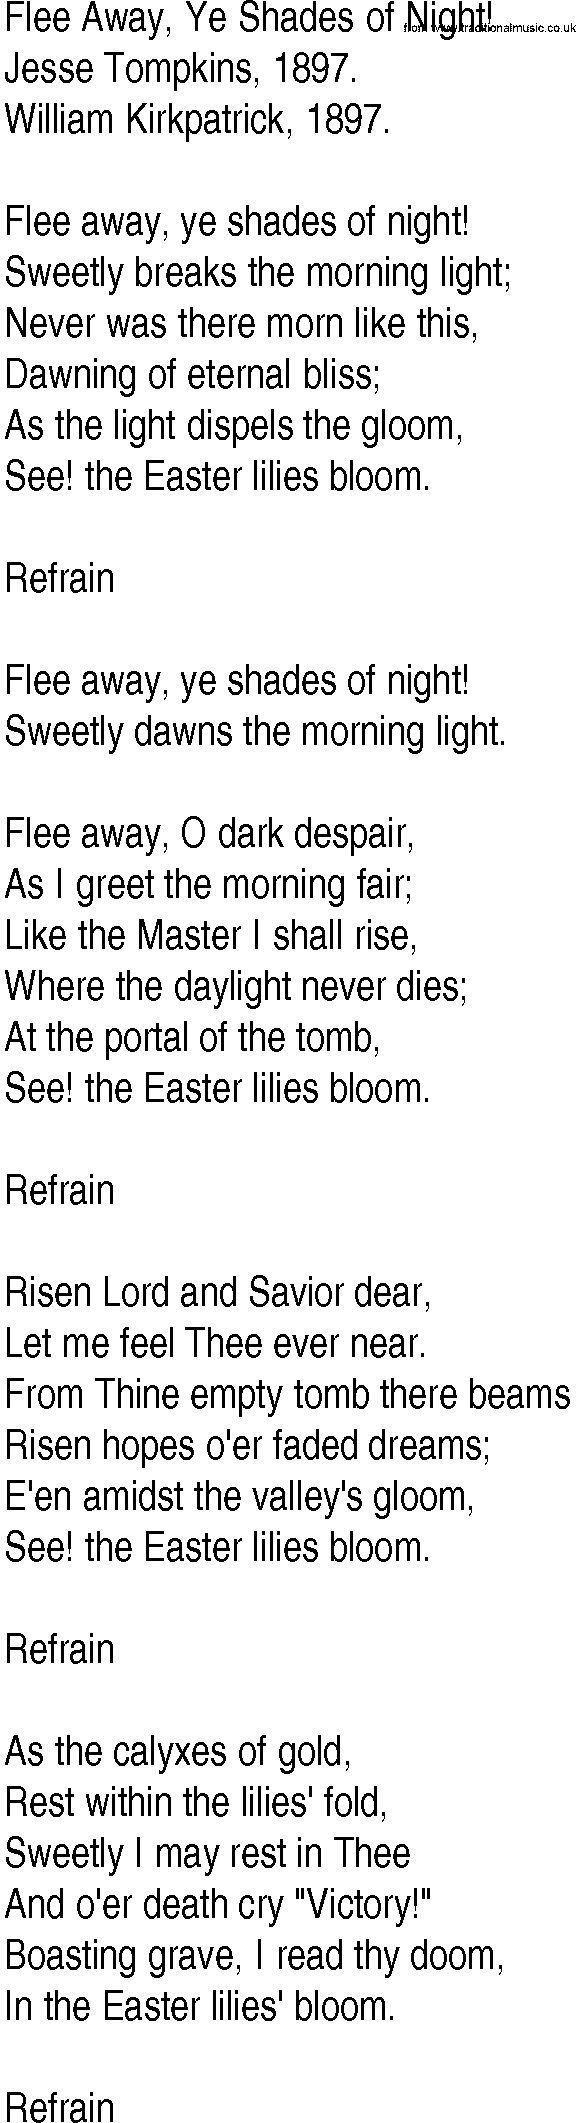 Hymn and Gospel Song: Flee Away, Ye Shades of Night! by Jesse Tompkins lyrics